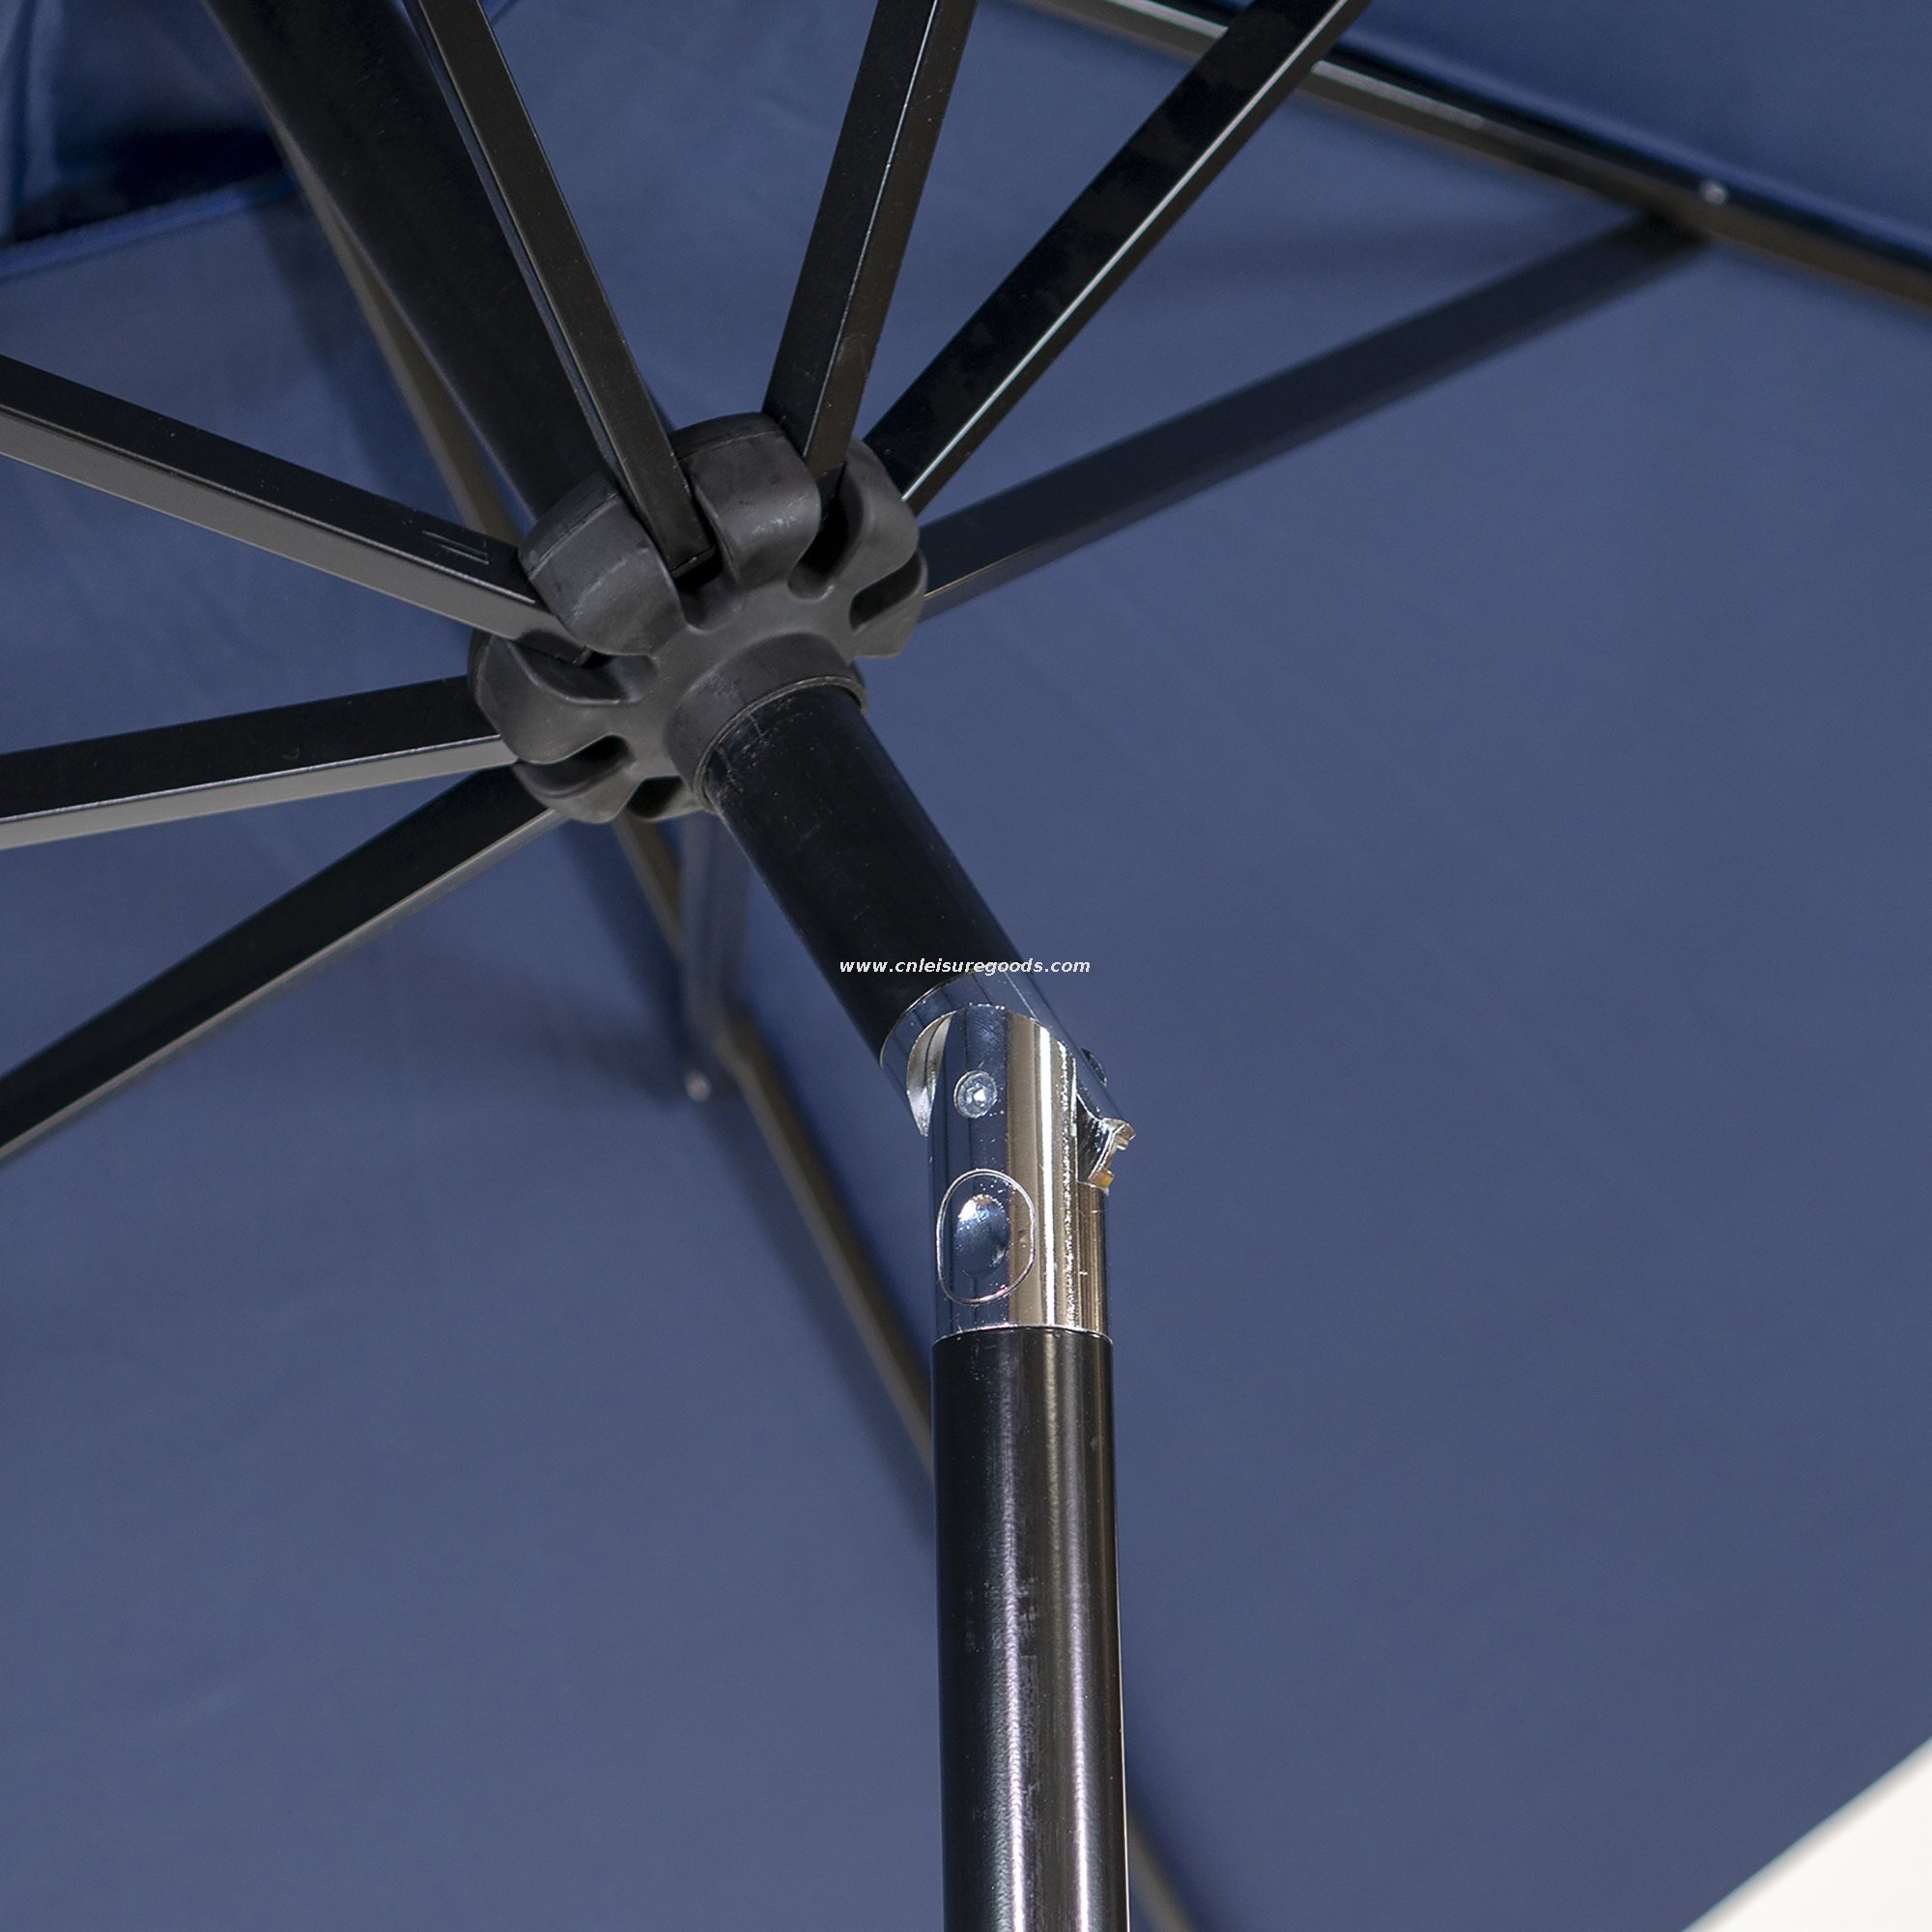 3.5M Balcony Patio UV Resistant Outdoor Durable Parasol with 8 Sturdy Ribs Garden Beach Restaurant Umbrella